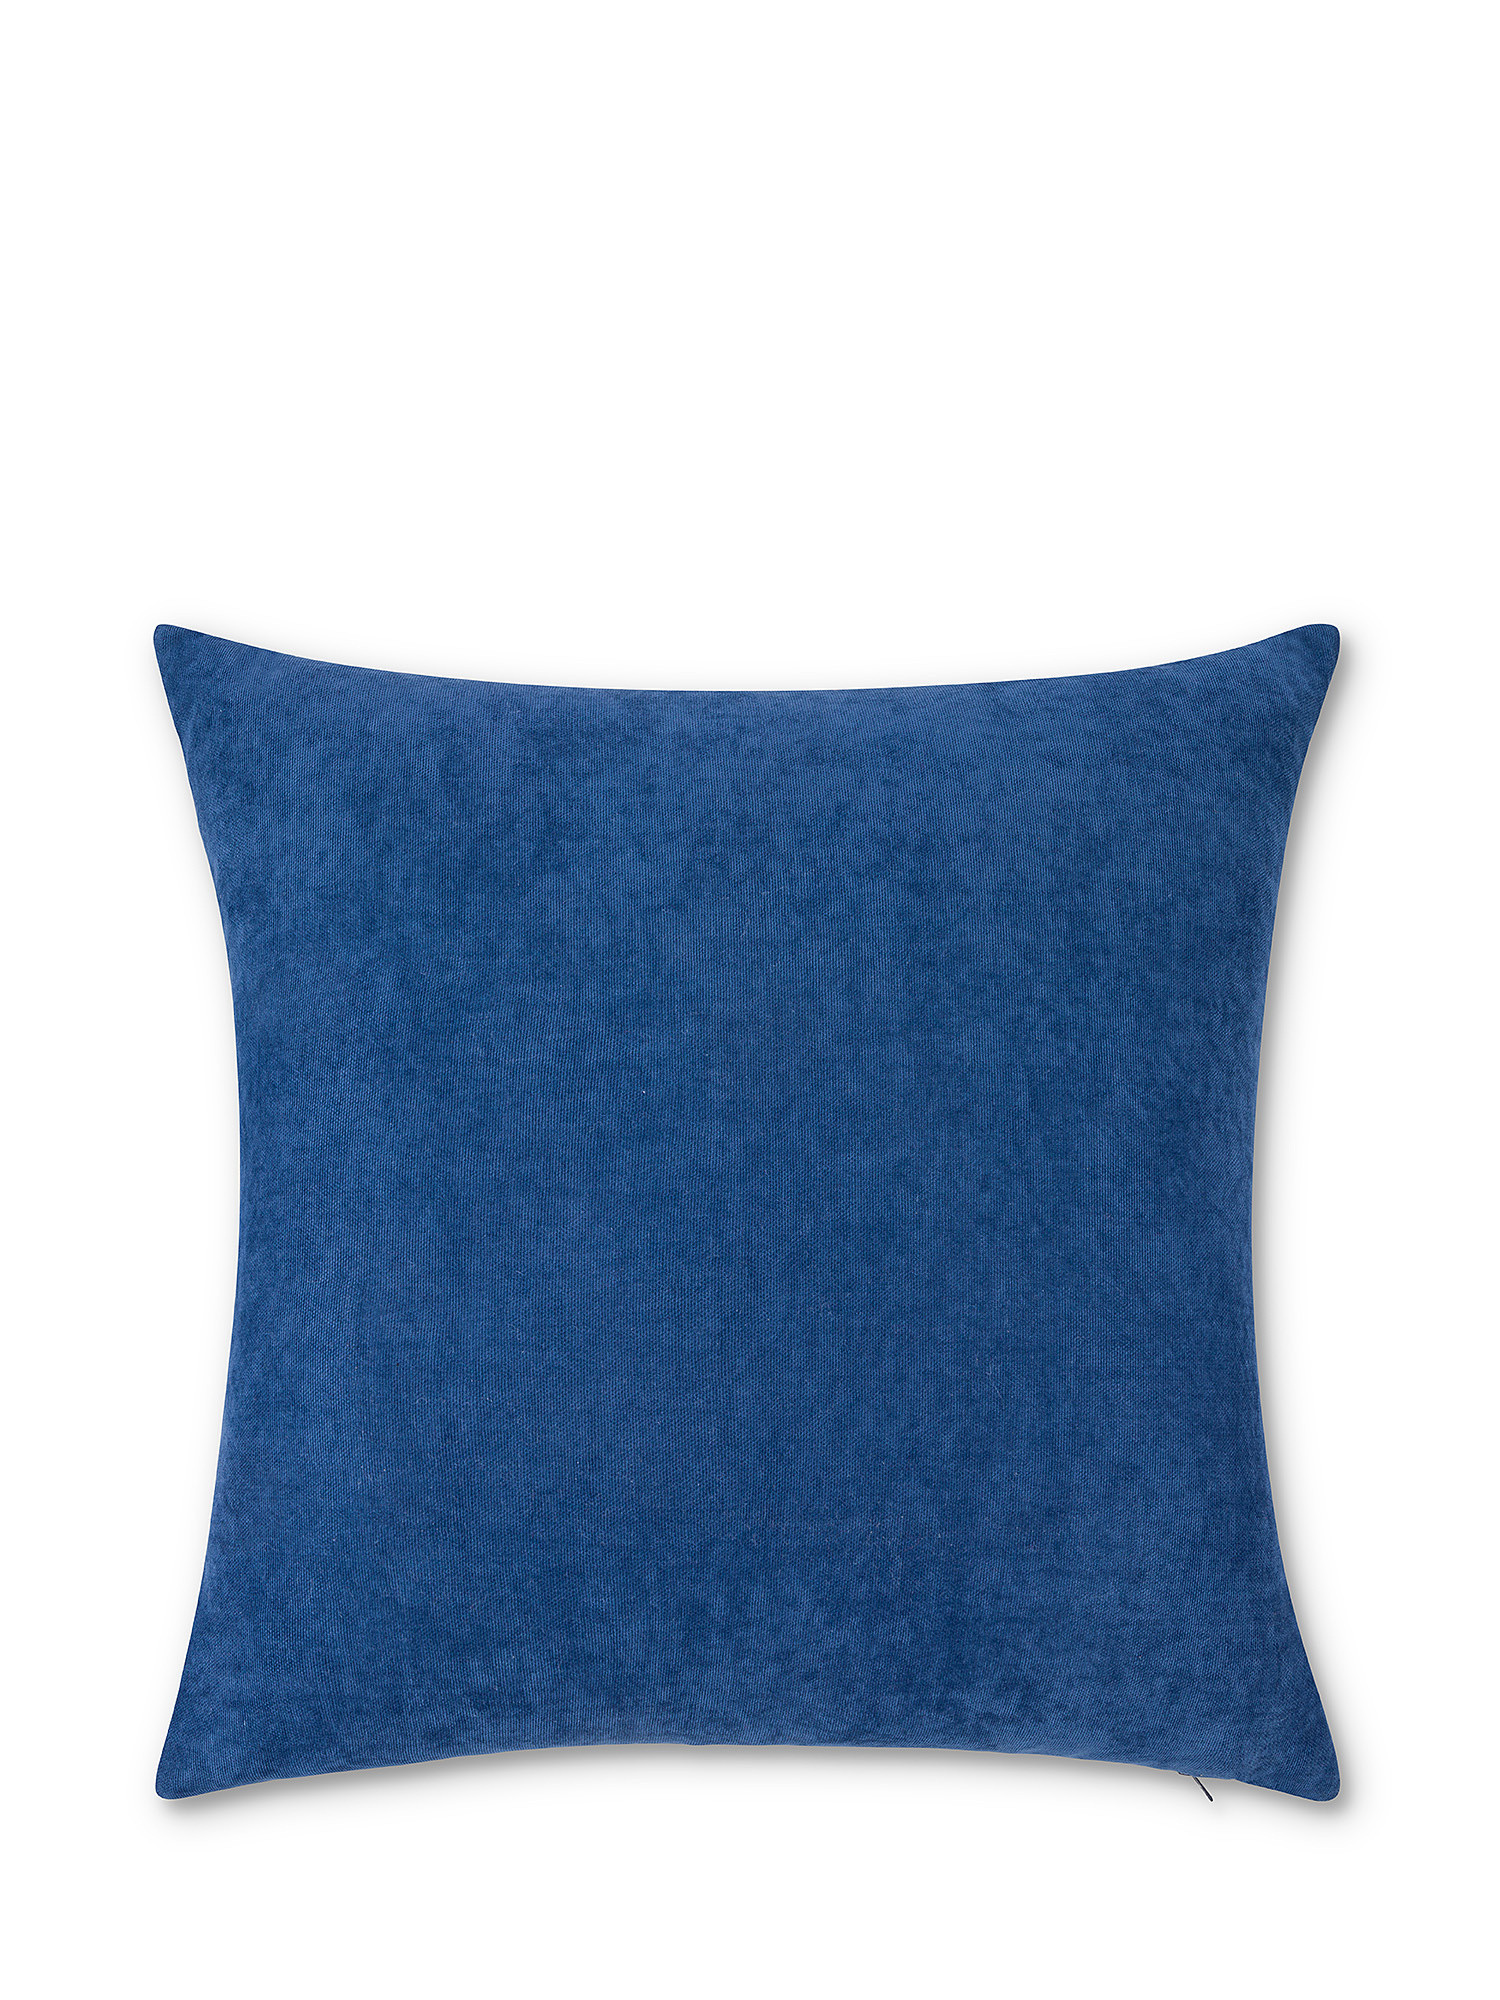 Cuscino tessuto motivo a righe 45x45cm, Blu, large image number 1